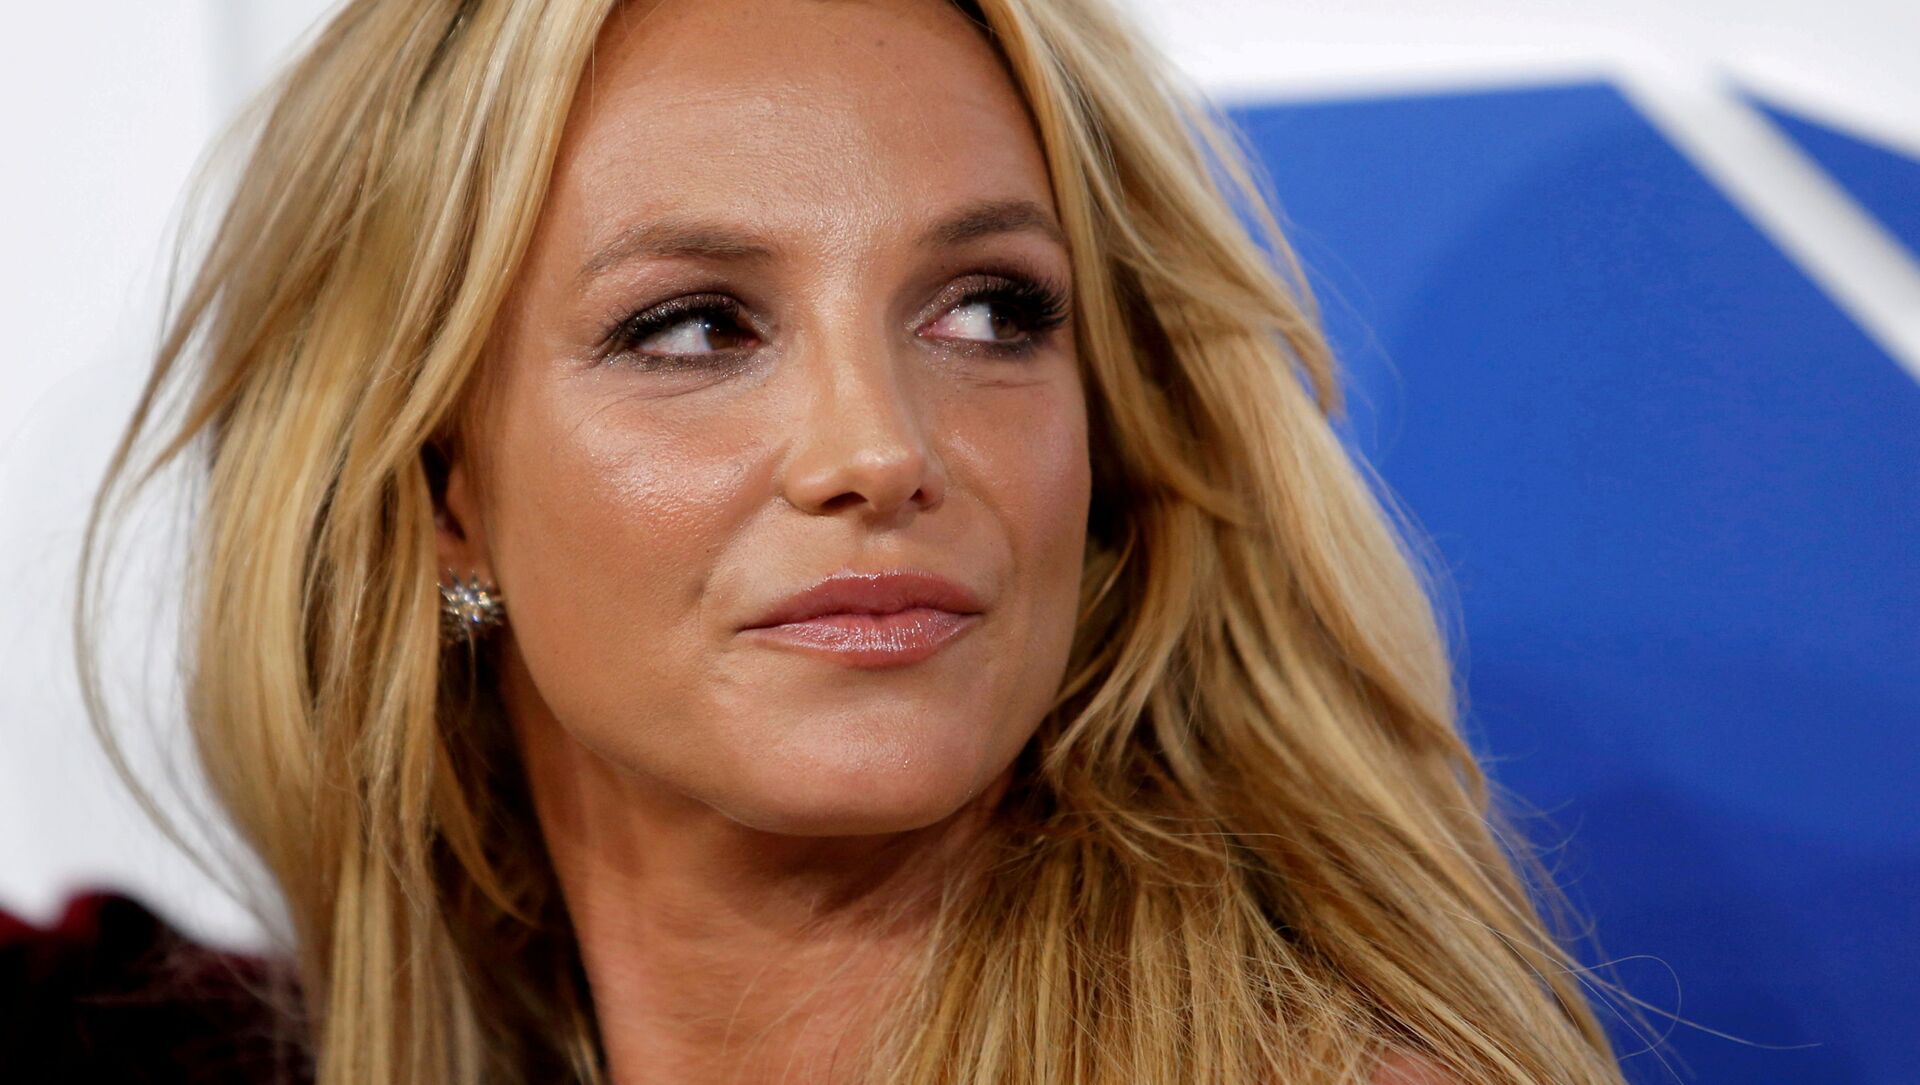 Singer Britney Spears arrives at the 2016 MTV Video Music Awards in New York, US, 28 August 2016 - Sputnik International, 1920, 02.07.2021